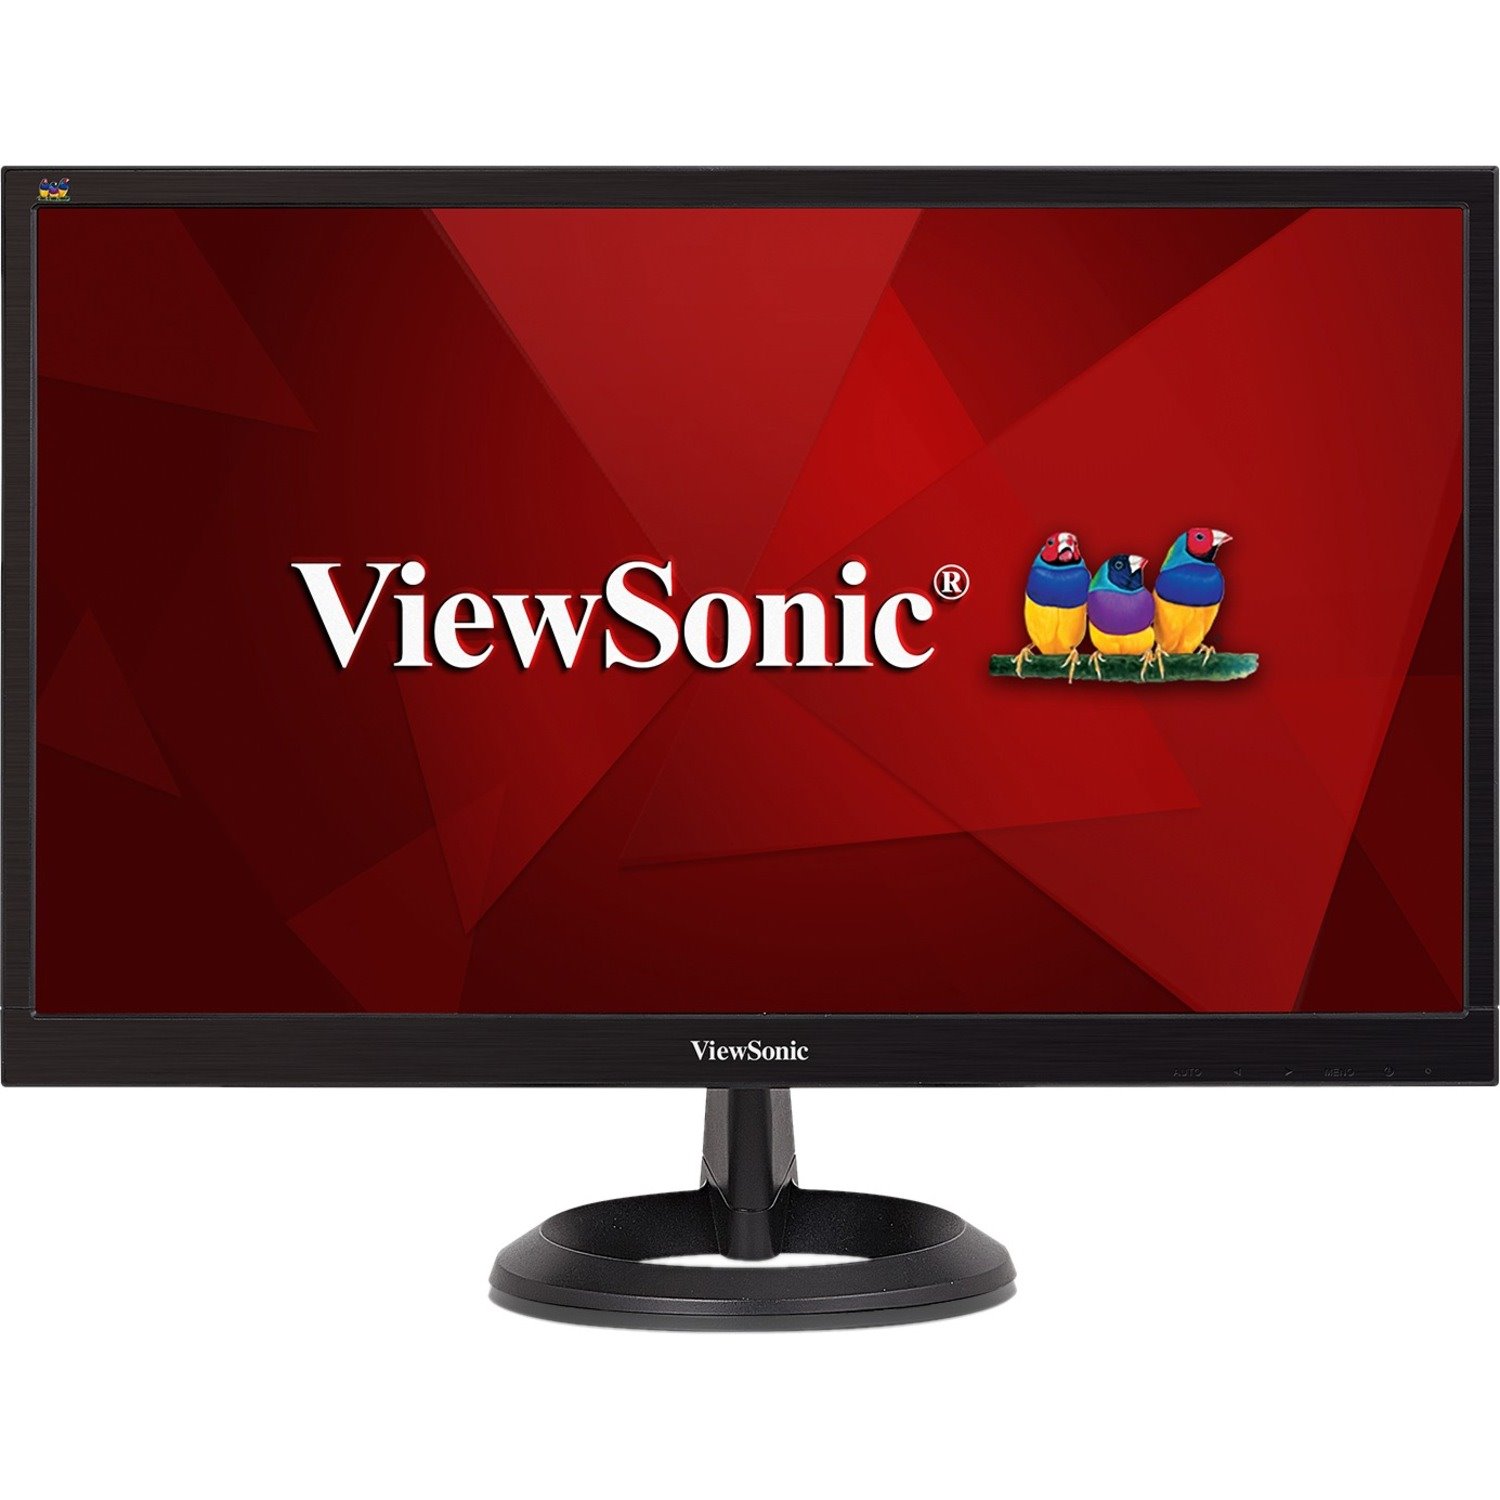 ViewSonic VA2261H-2 21.5" Full HD LED LCD Monitor - 16:9